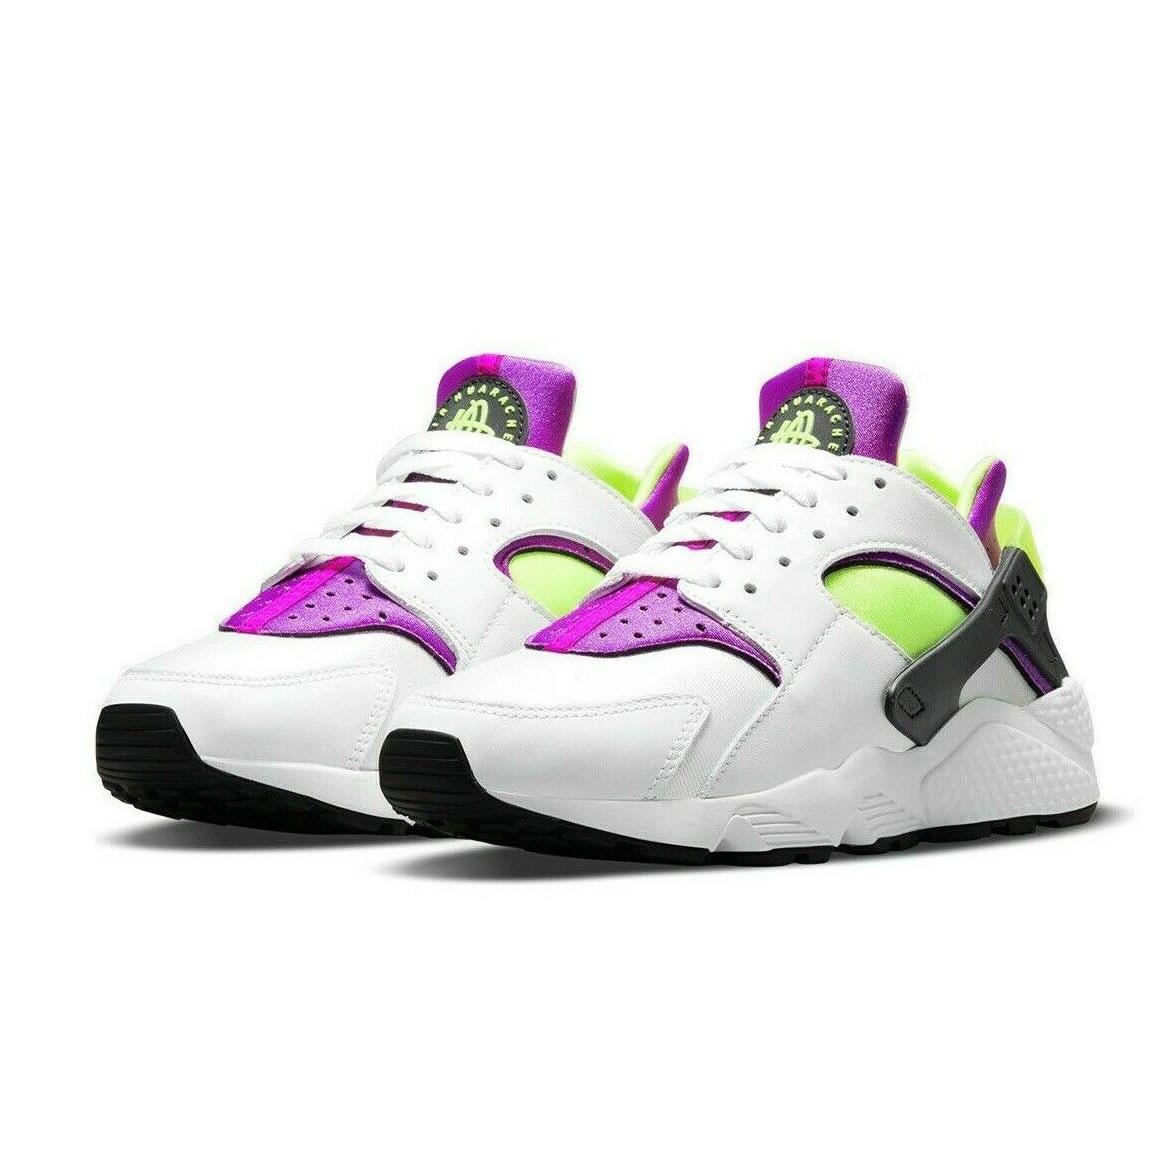 Nike Air Huarache Womens Size 7 Sneaker Shoes DH4439 101 White Purple Neon